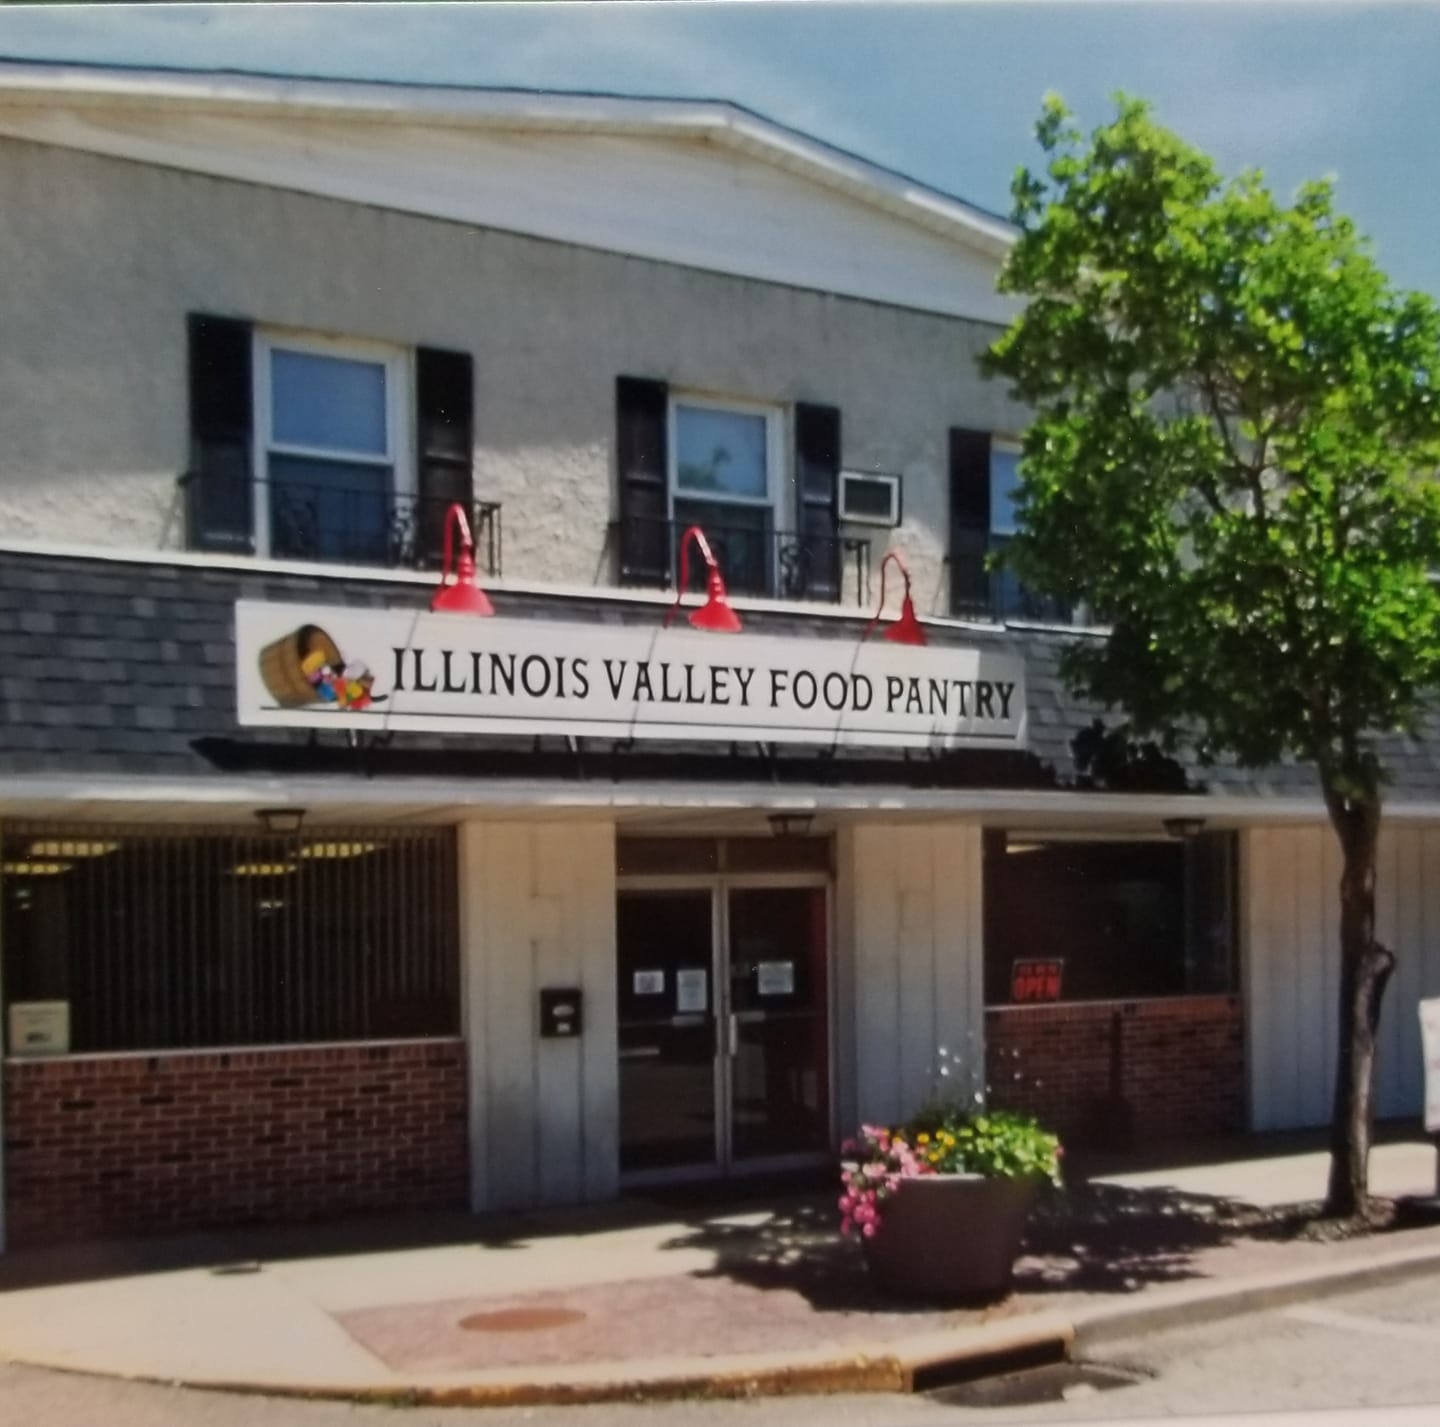 Illinois Valley Food Pantry